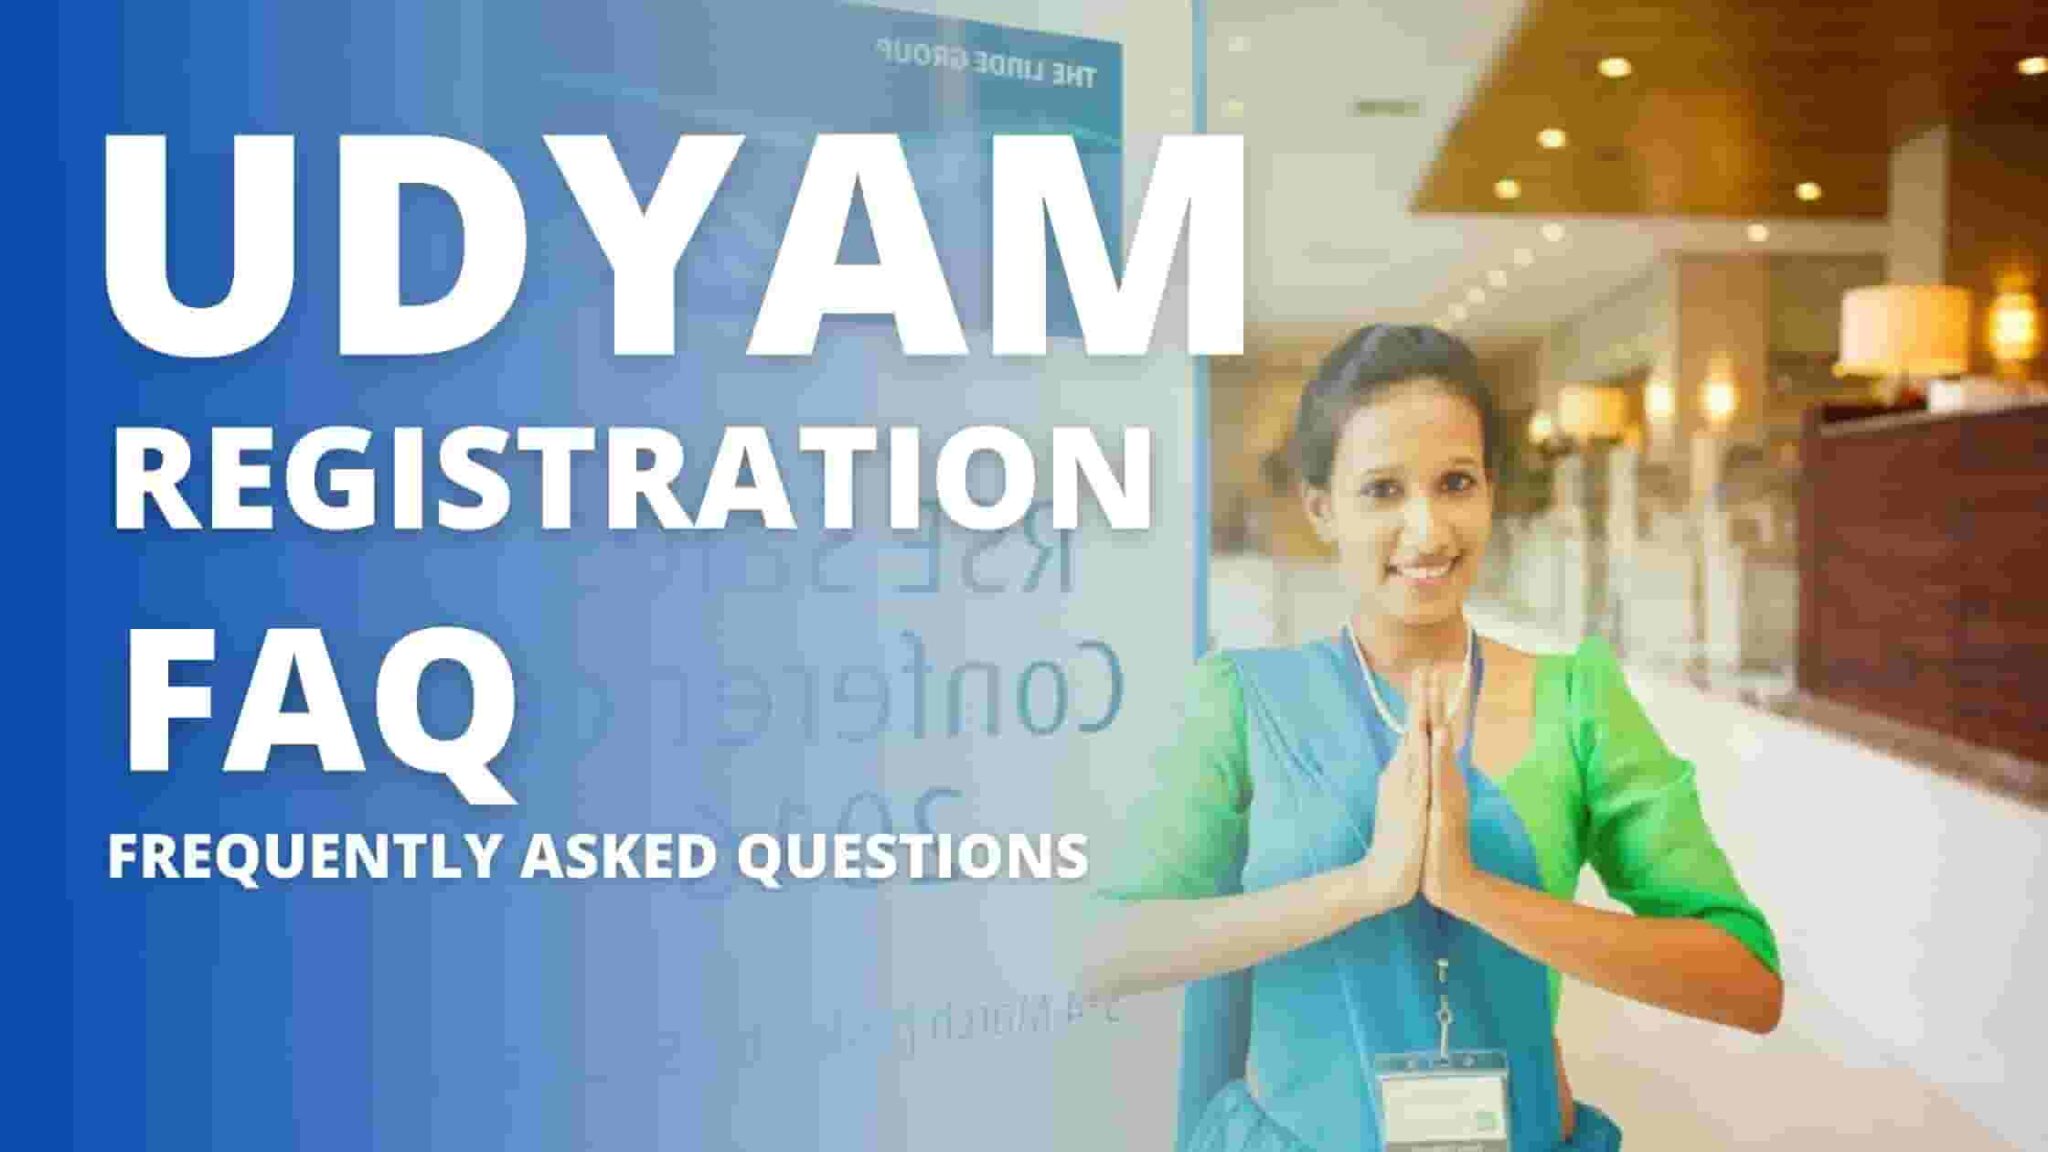 udyam registration faq